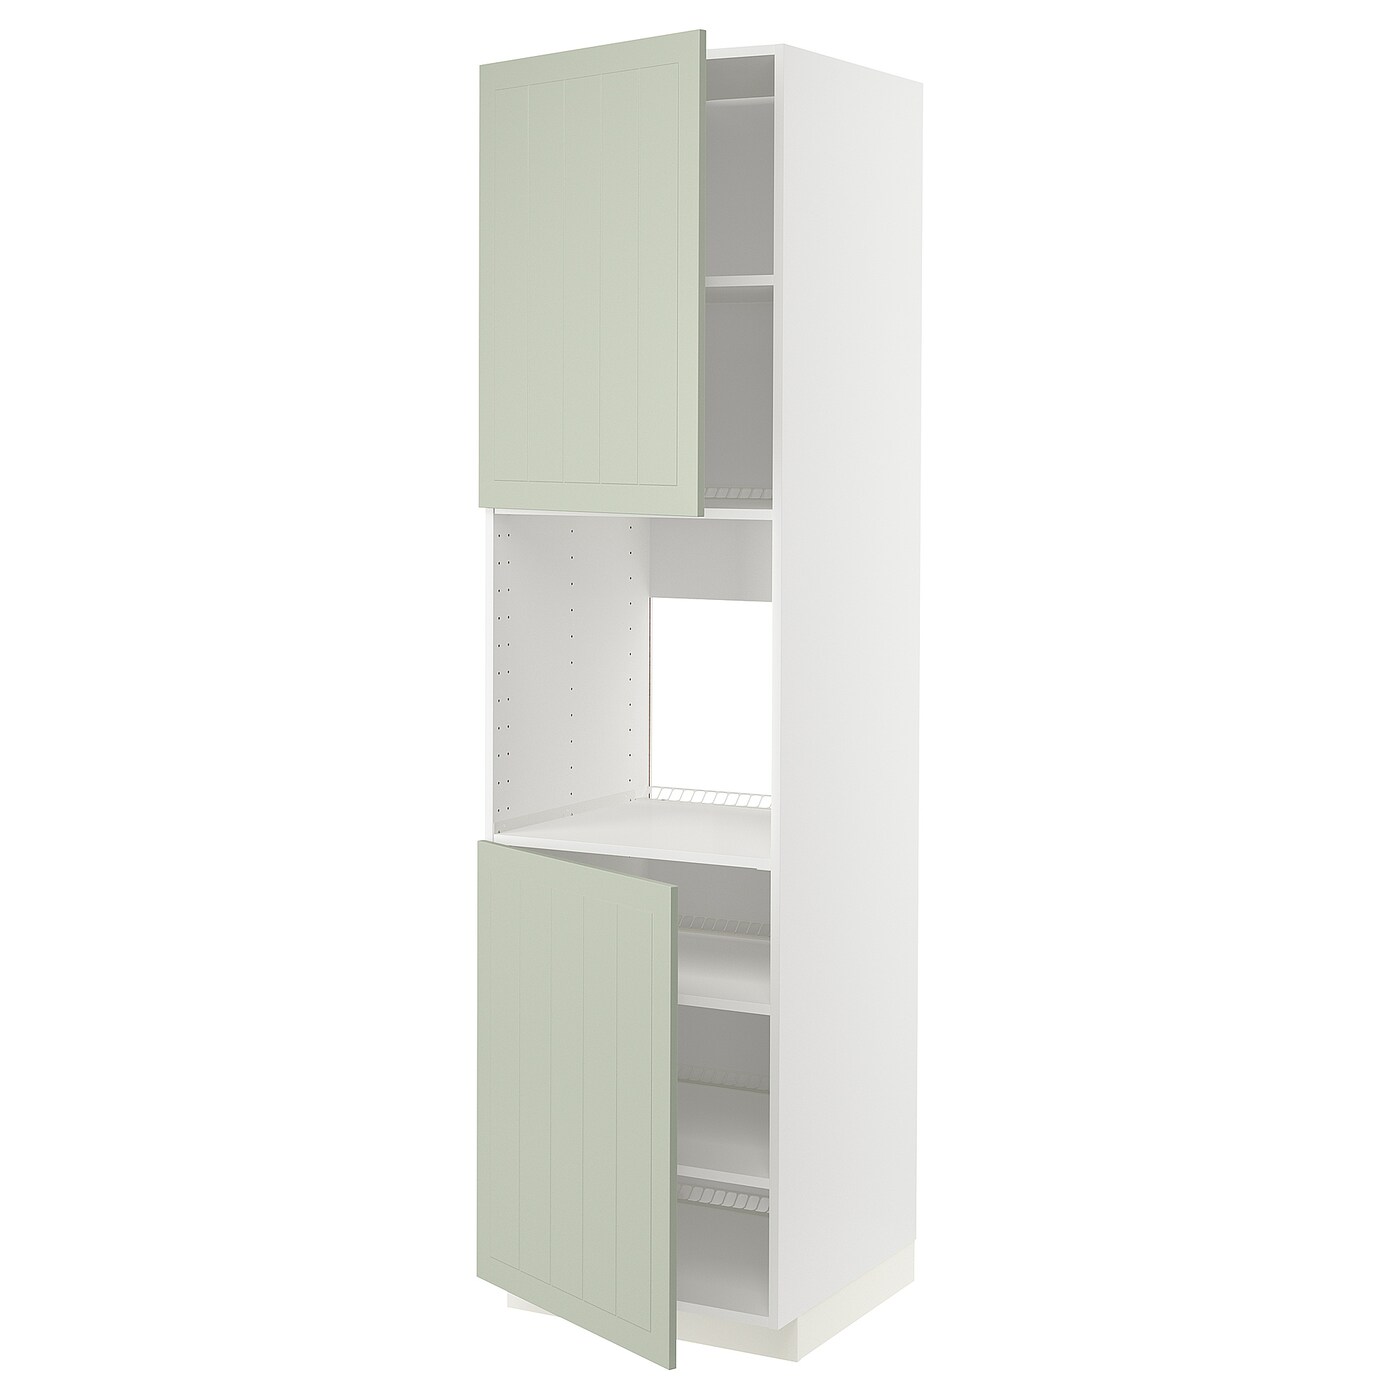 Кухонный шкаф-пенал - IKEA METOD/МЕТОД ИКЕА, 220х60х60 см, белый/зеленый